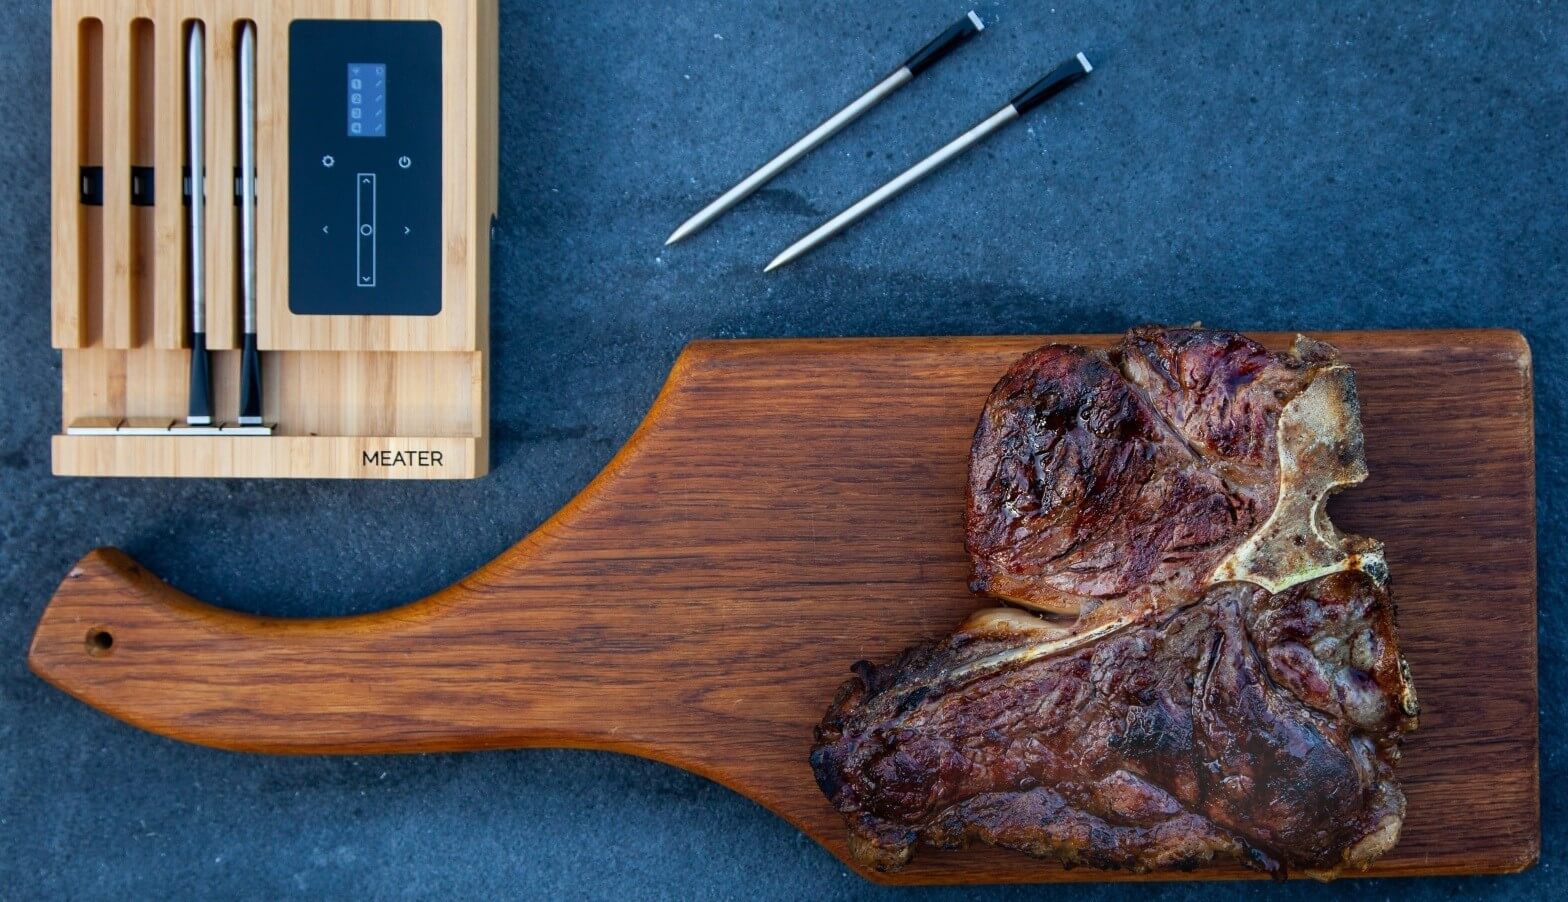 teplomer-meater-block-a-steak